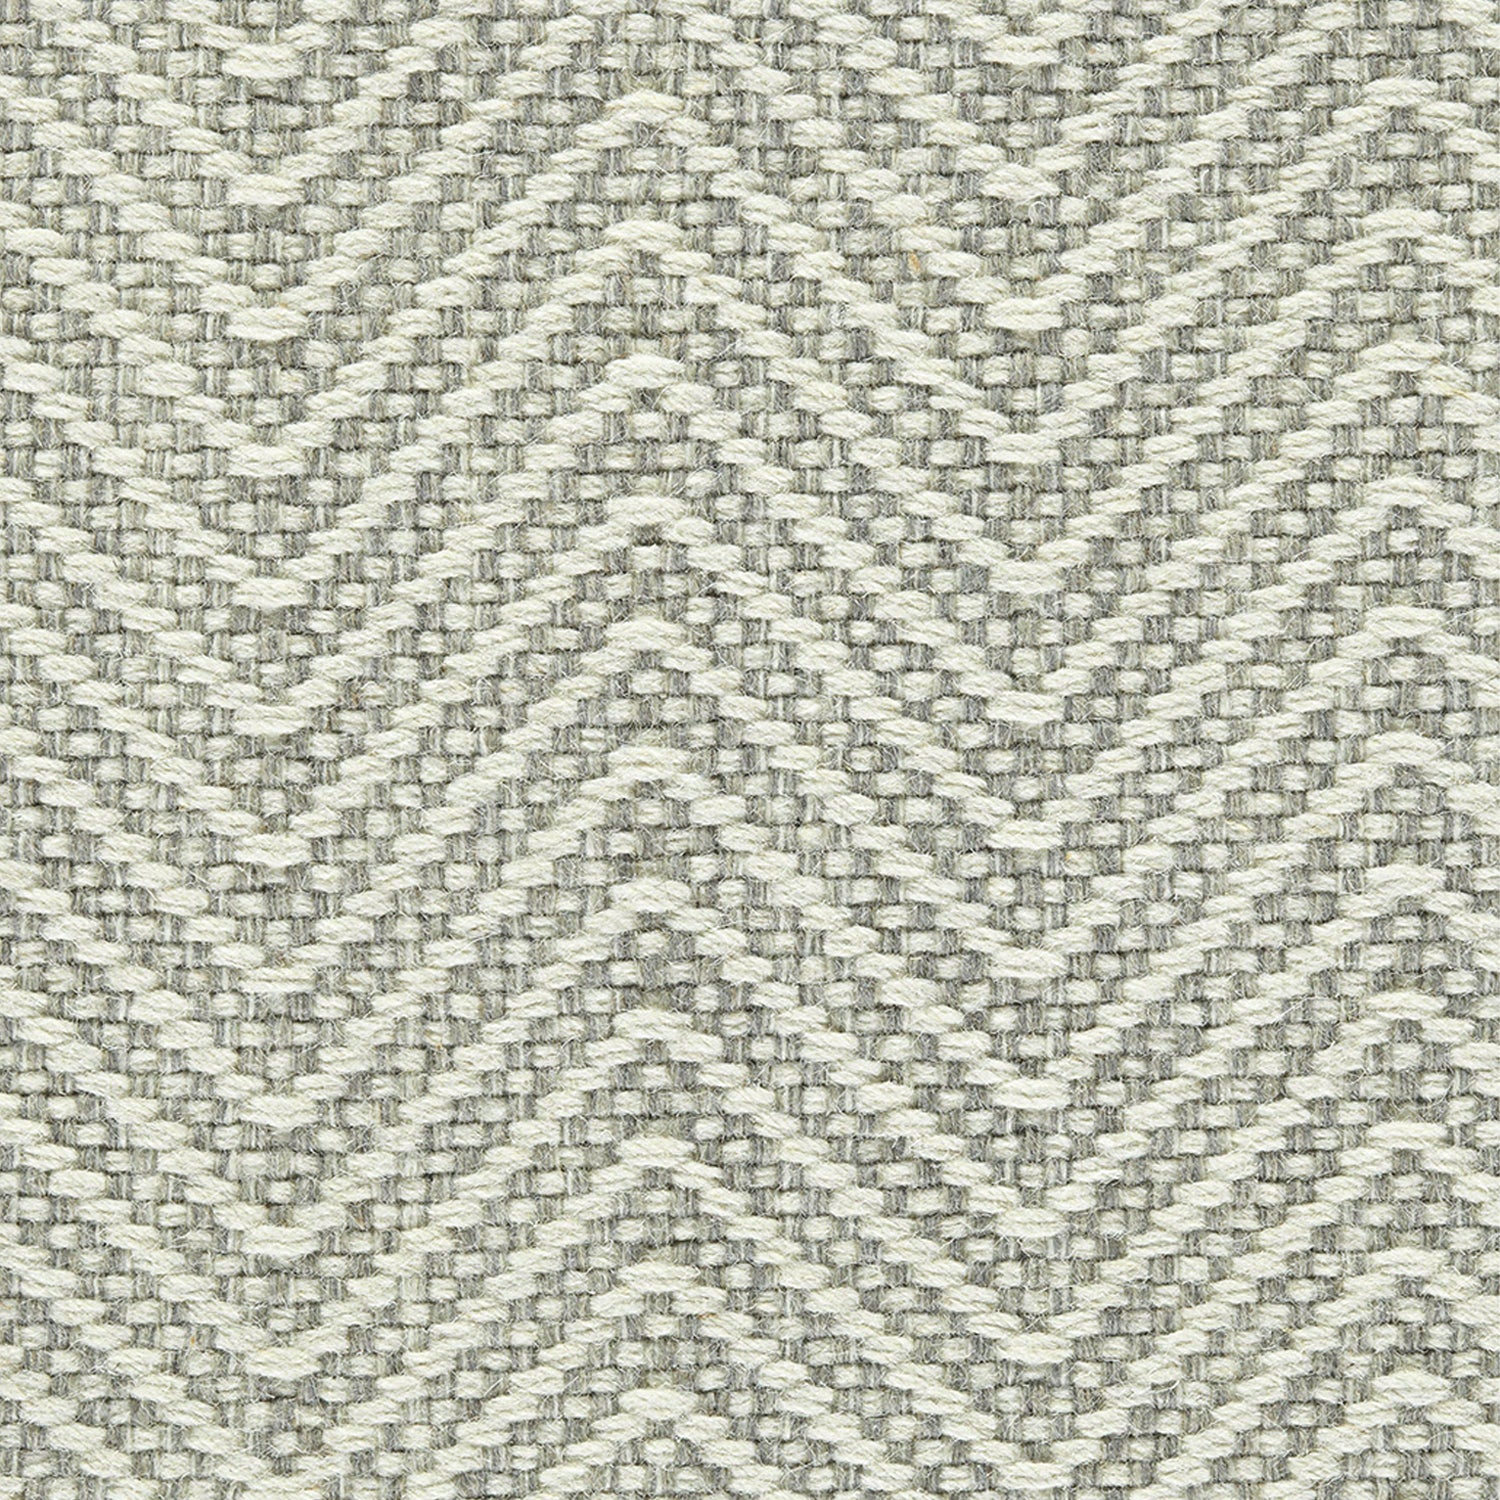 Wool broadloom carpet swatch in a chunky herringbone weave in silver and cream.